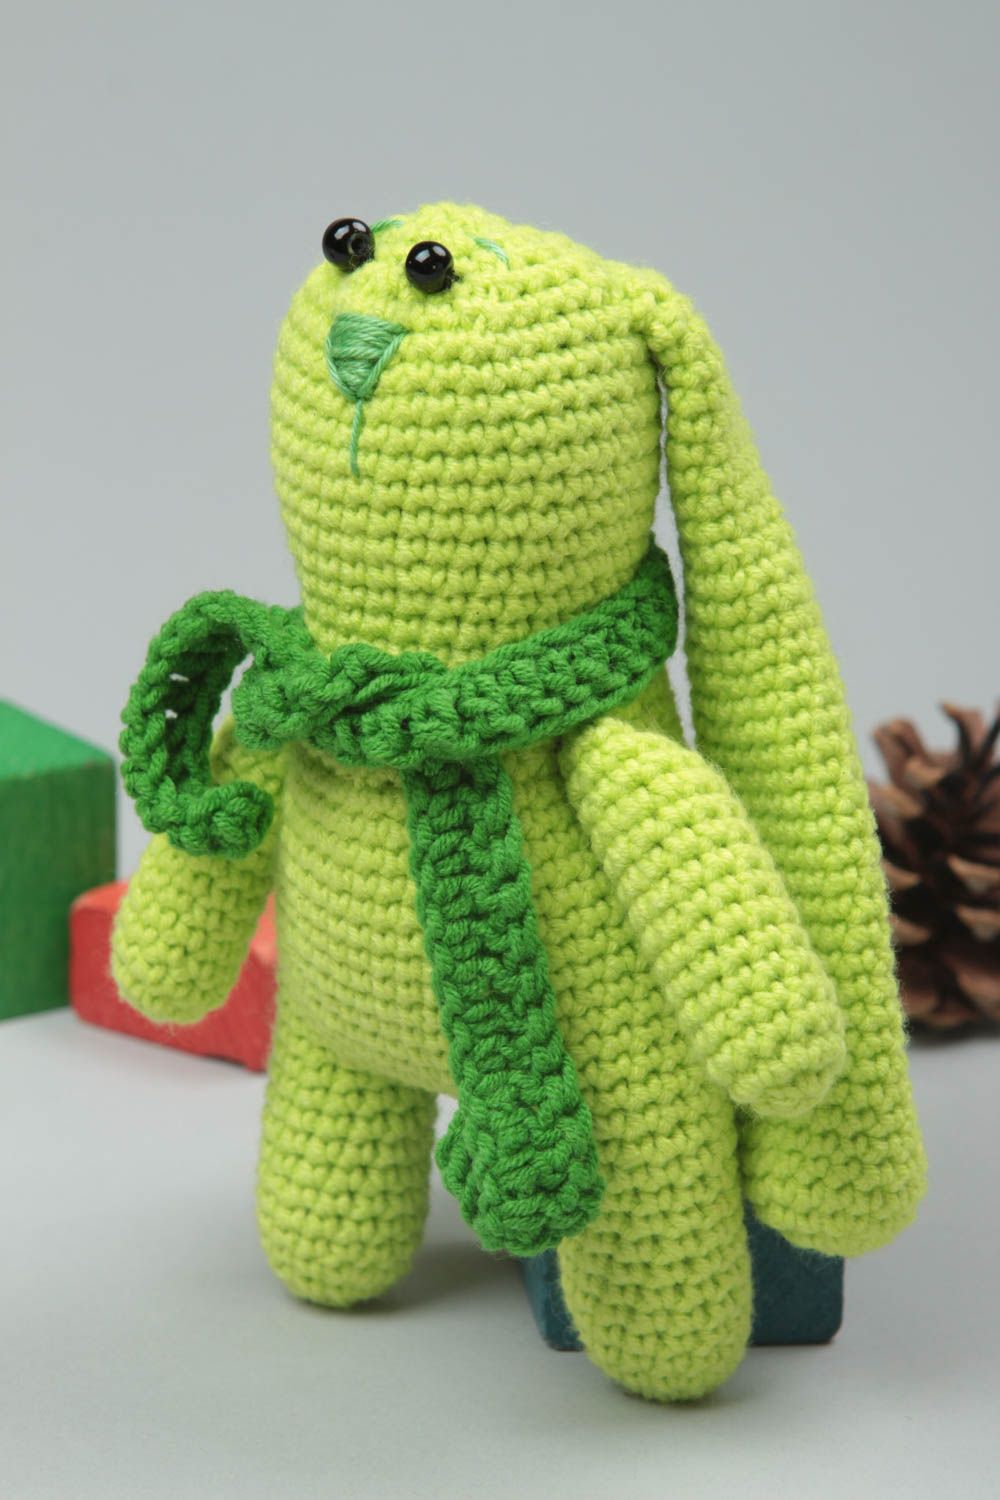 Unusual handmade crochet toy soft childrens toys nursery design gift ideas photo 1